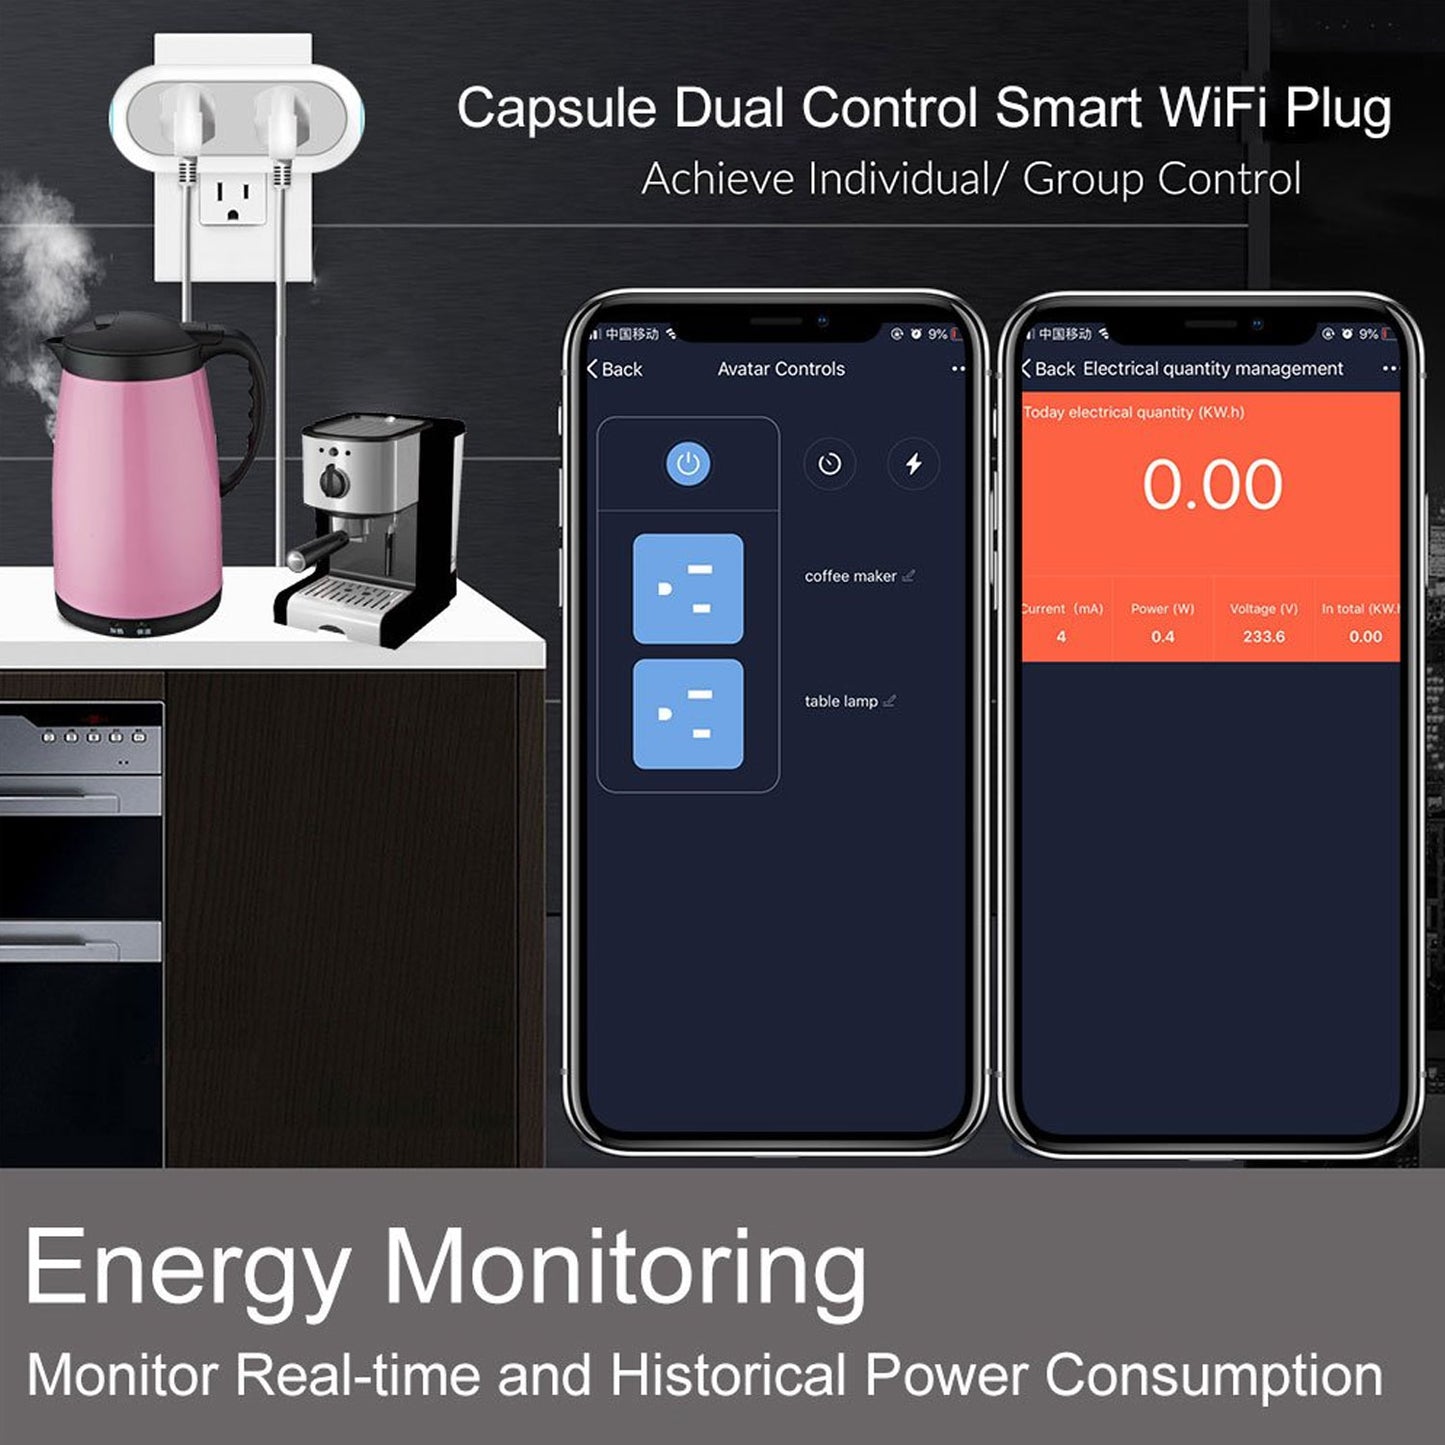 Jonathan Y Smart Dual Plug WiFi Remote App Control for Lights Appliances